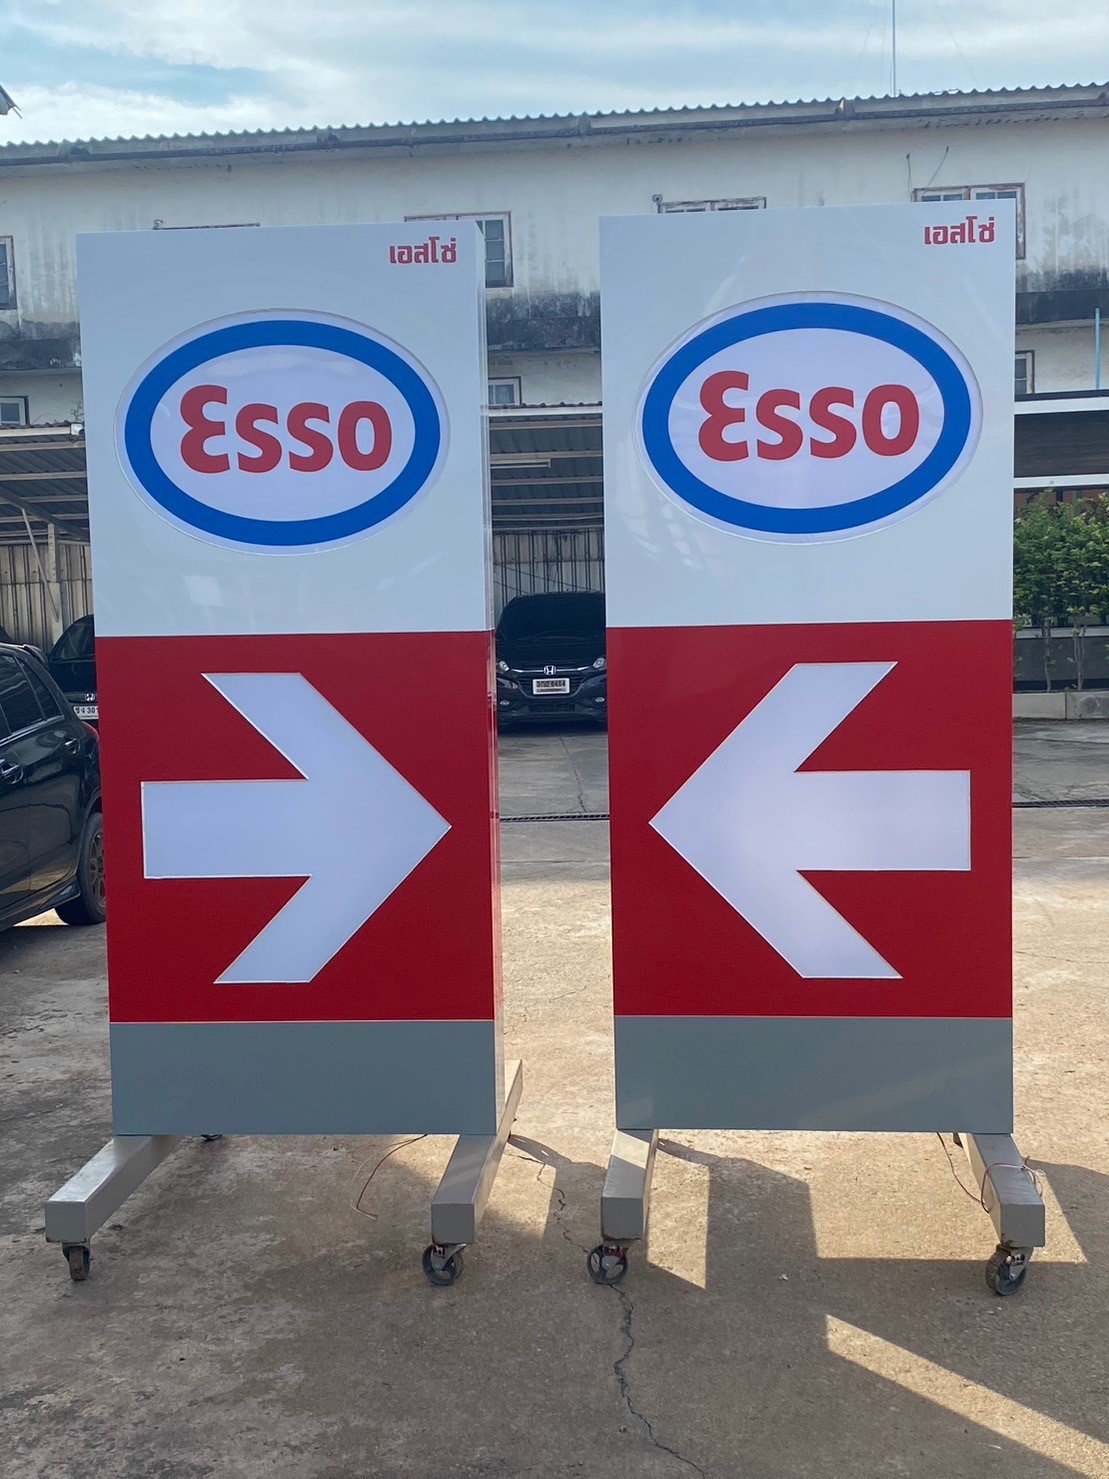 Esso  Arrow Stand ป้ายลูกศร บอกทางเข้า-ออก ในสถานีบริการน้ำมัน